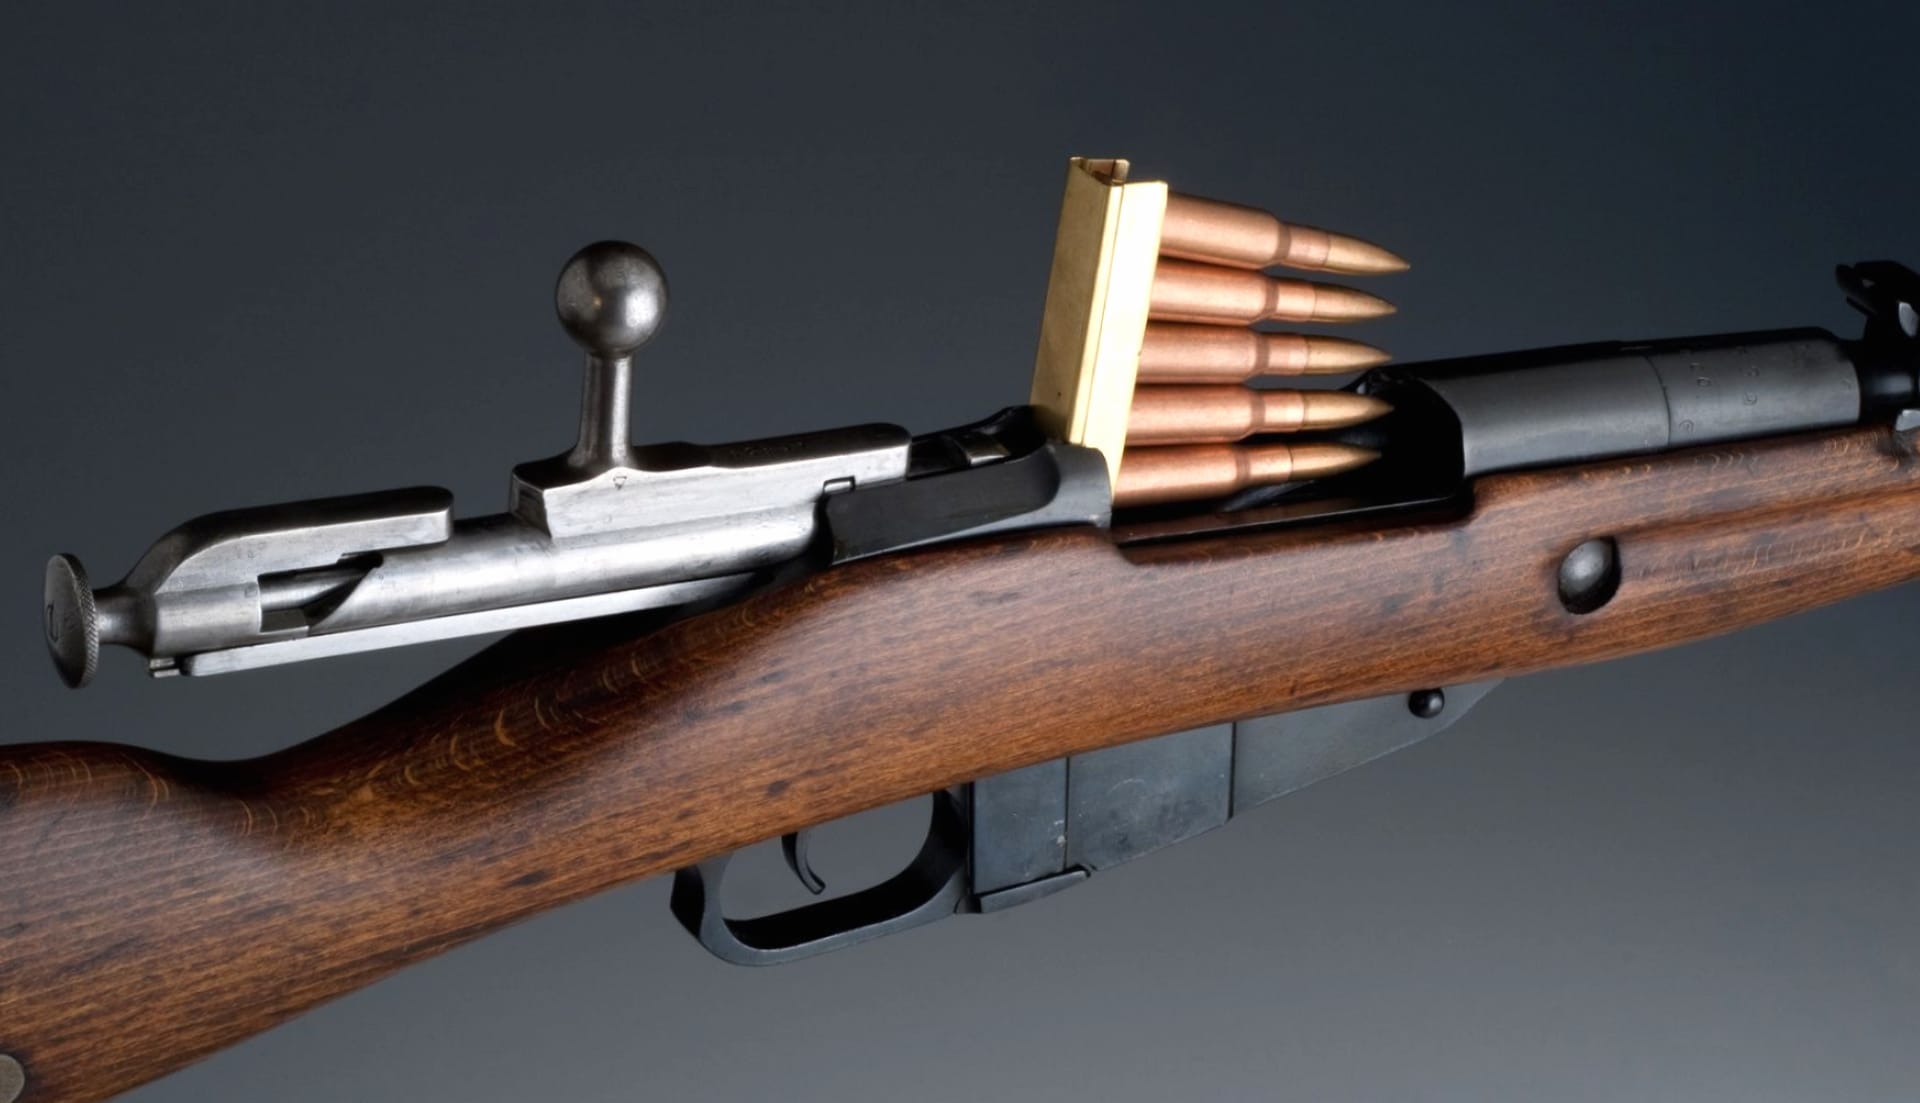 Mosin Nagant M44 Rifle at 1280 x 960 size wallpapers HD quality